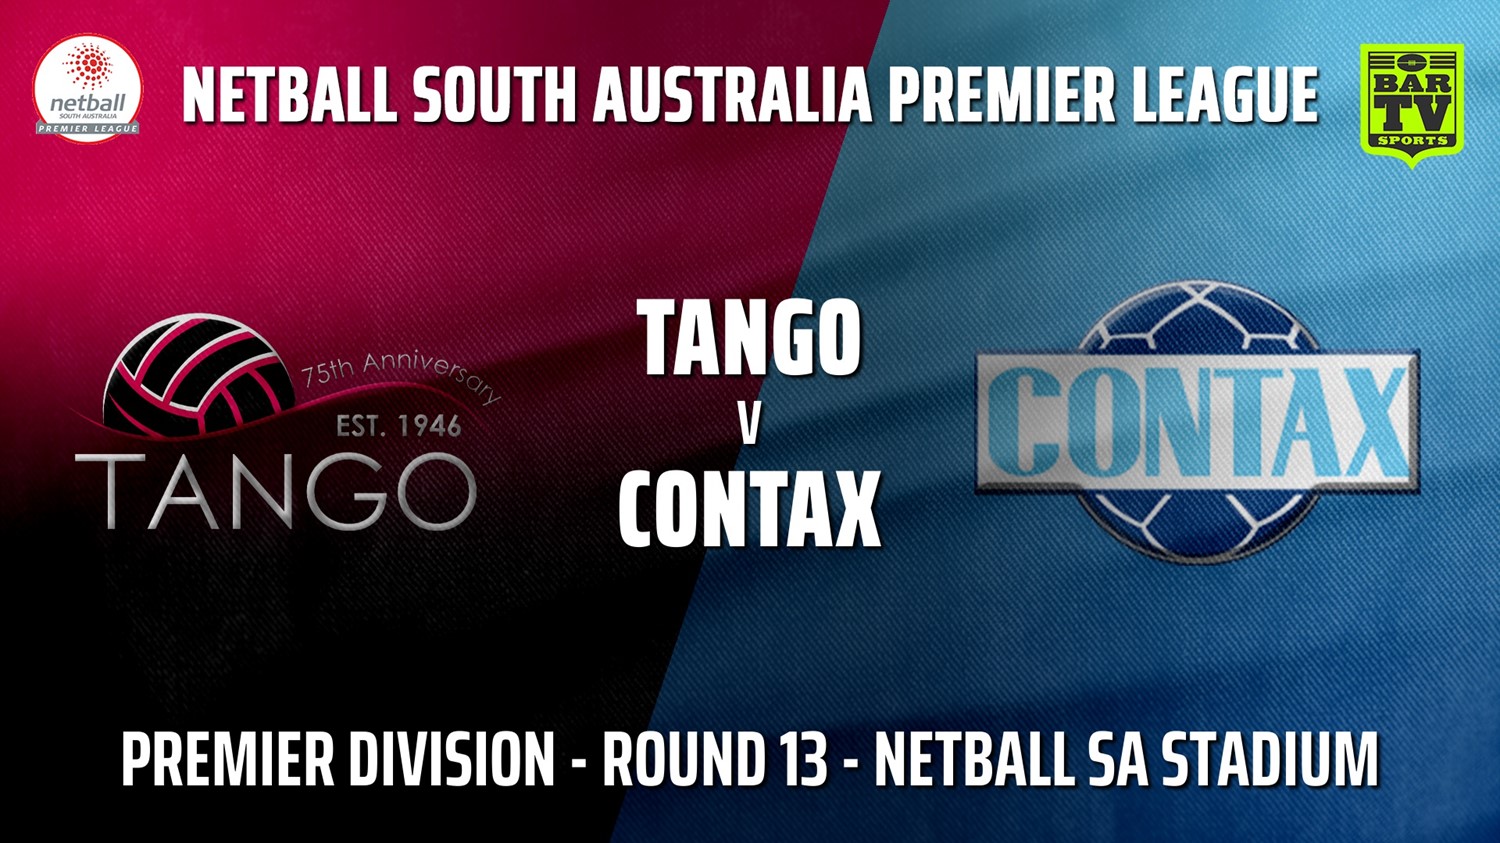 210806-SA Premier League Round 13 - Premier Division - Tango v Contax Slate Image